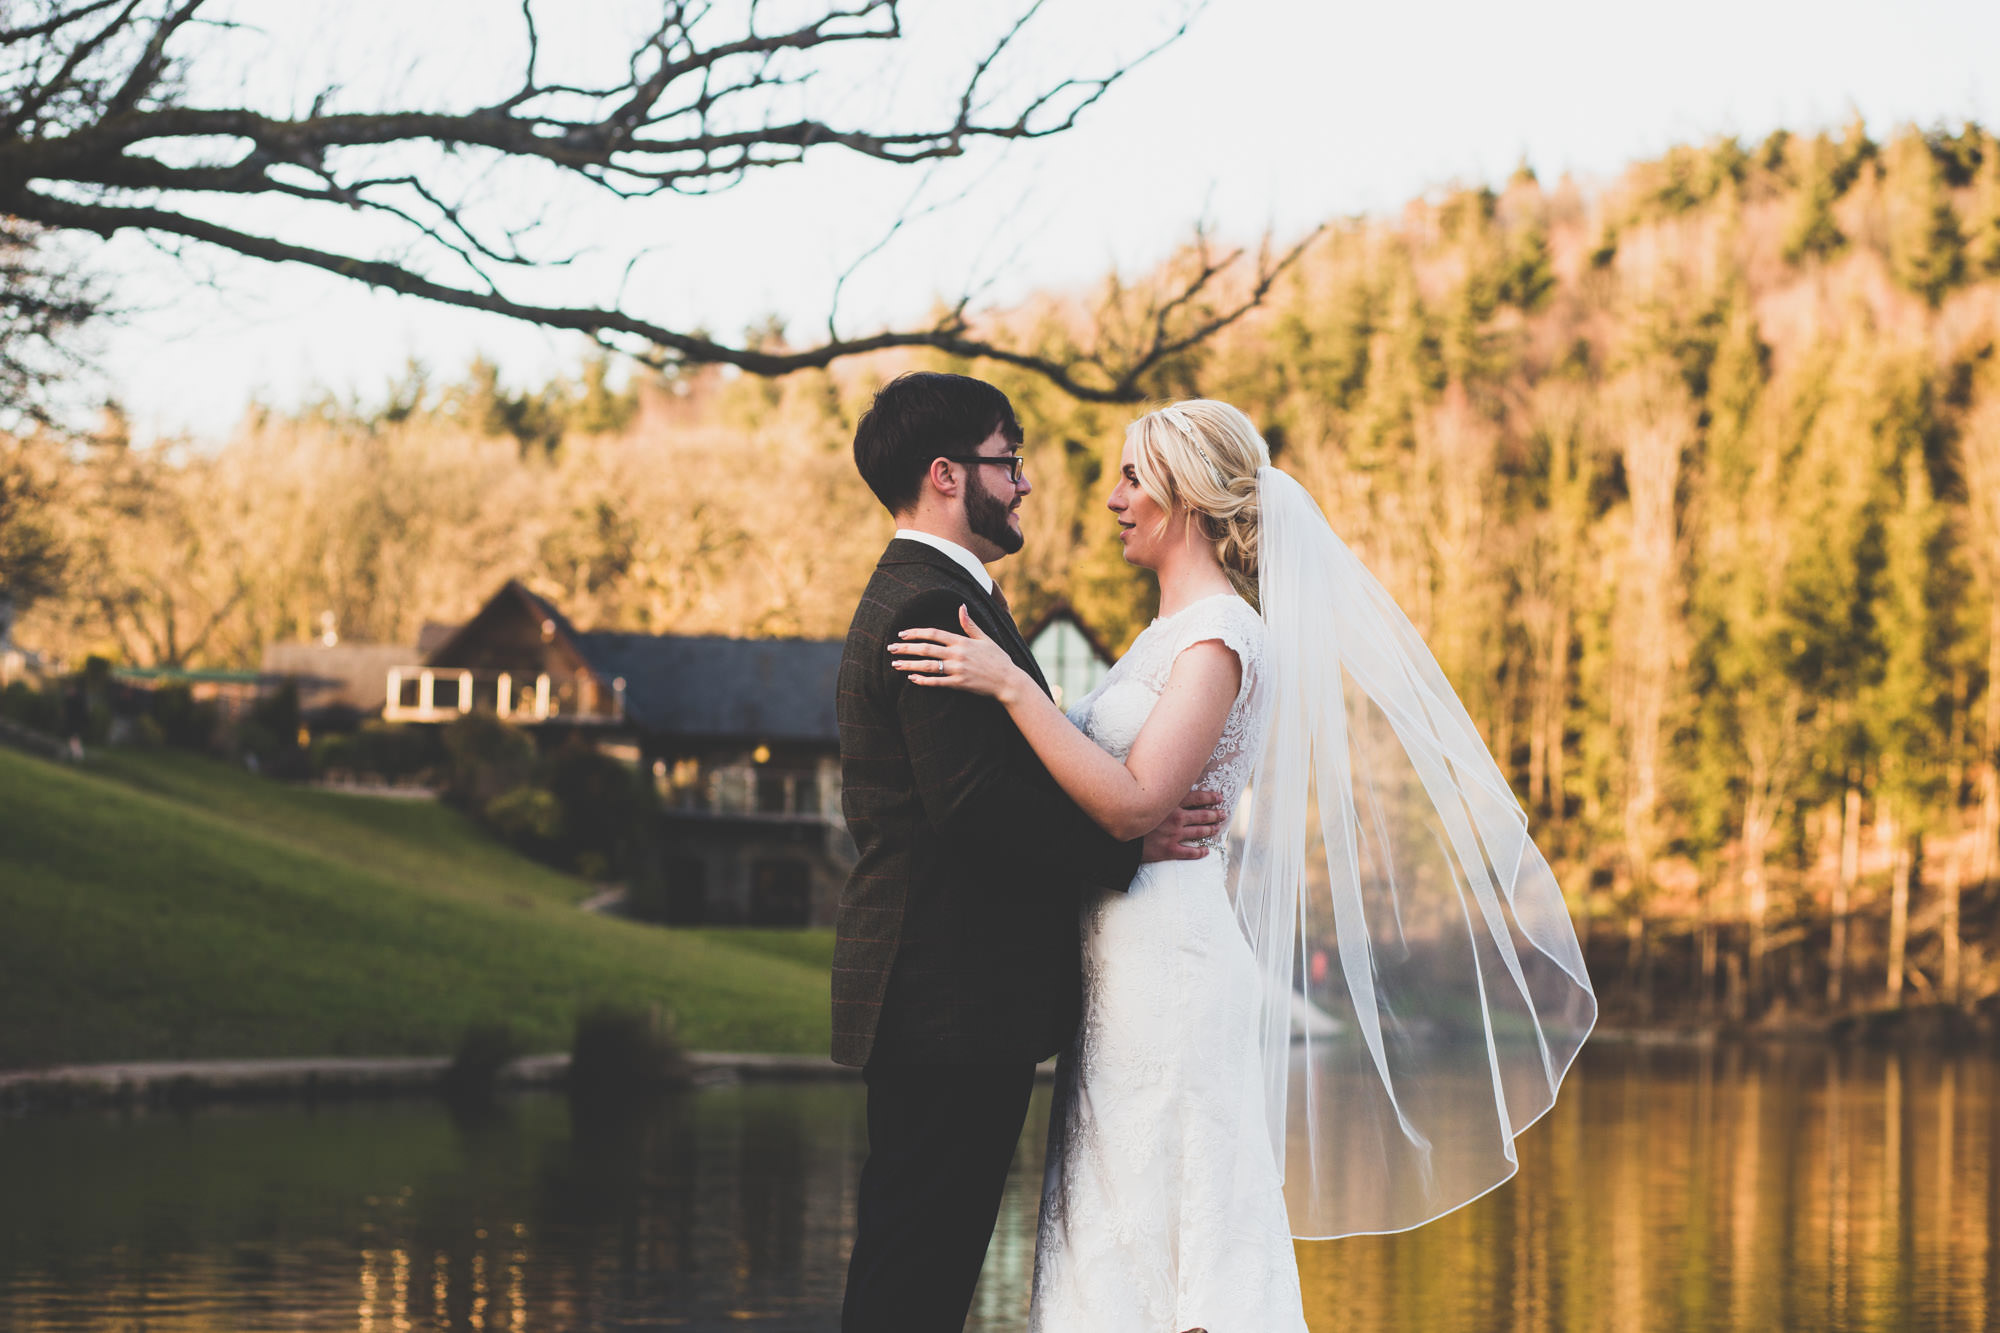 Canada Lodge and lake wedding photography 2019_1286.jpg